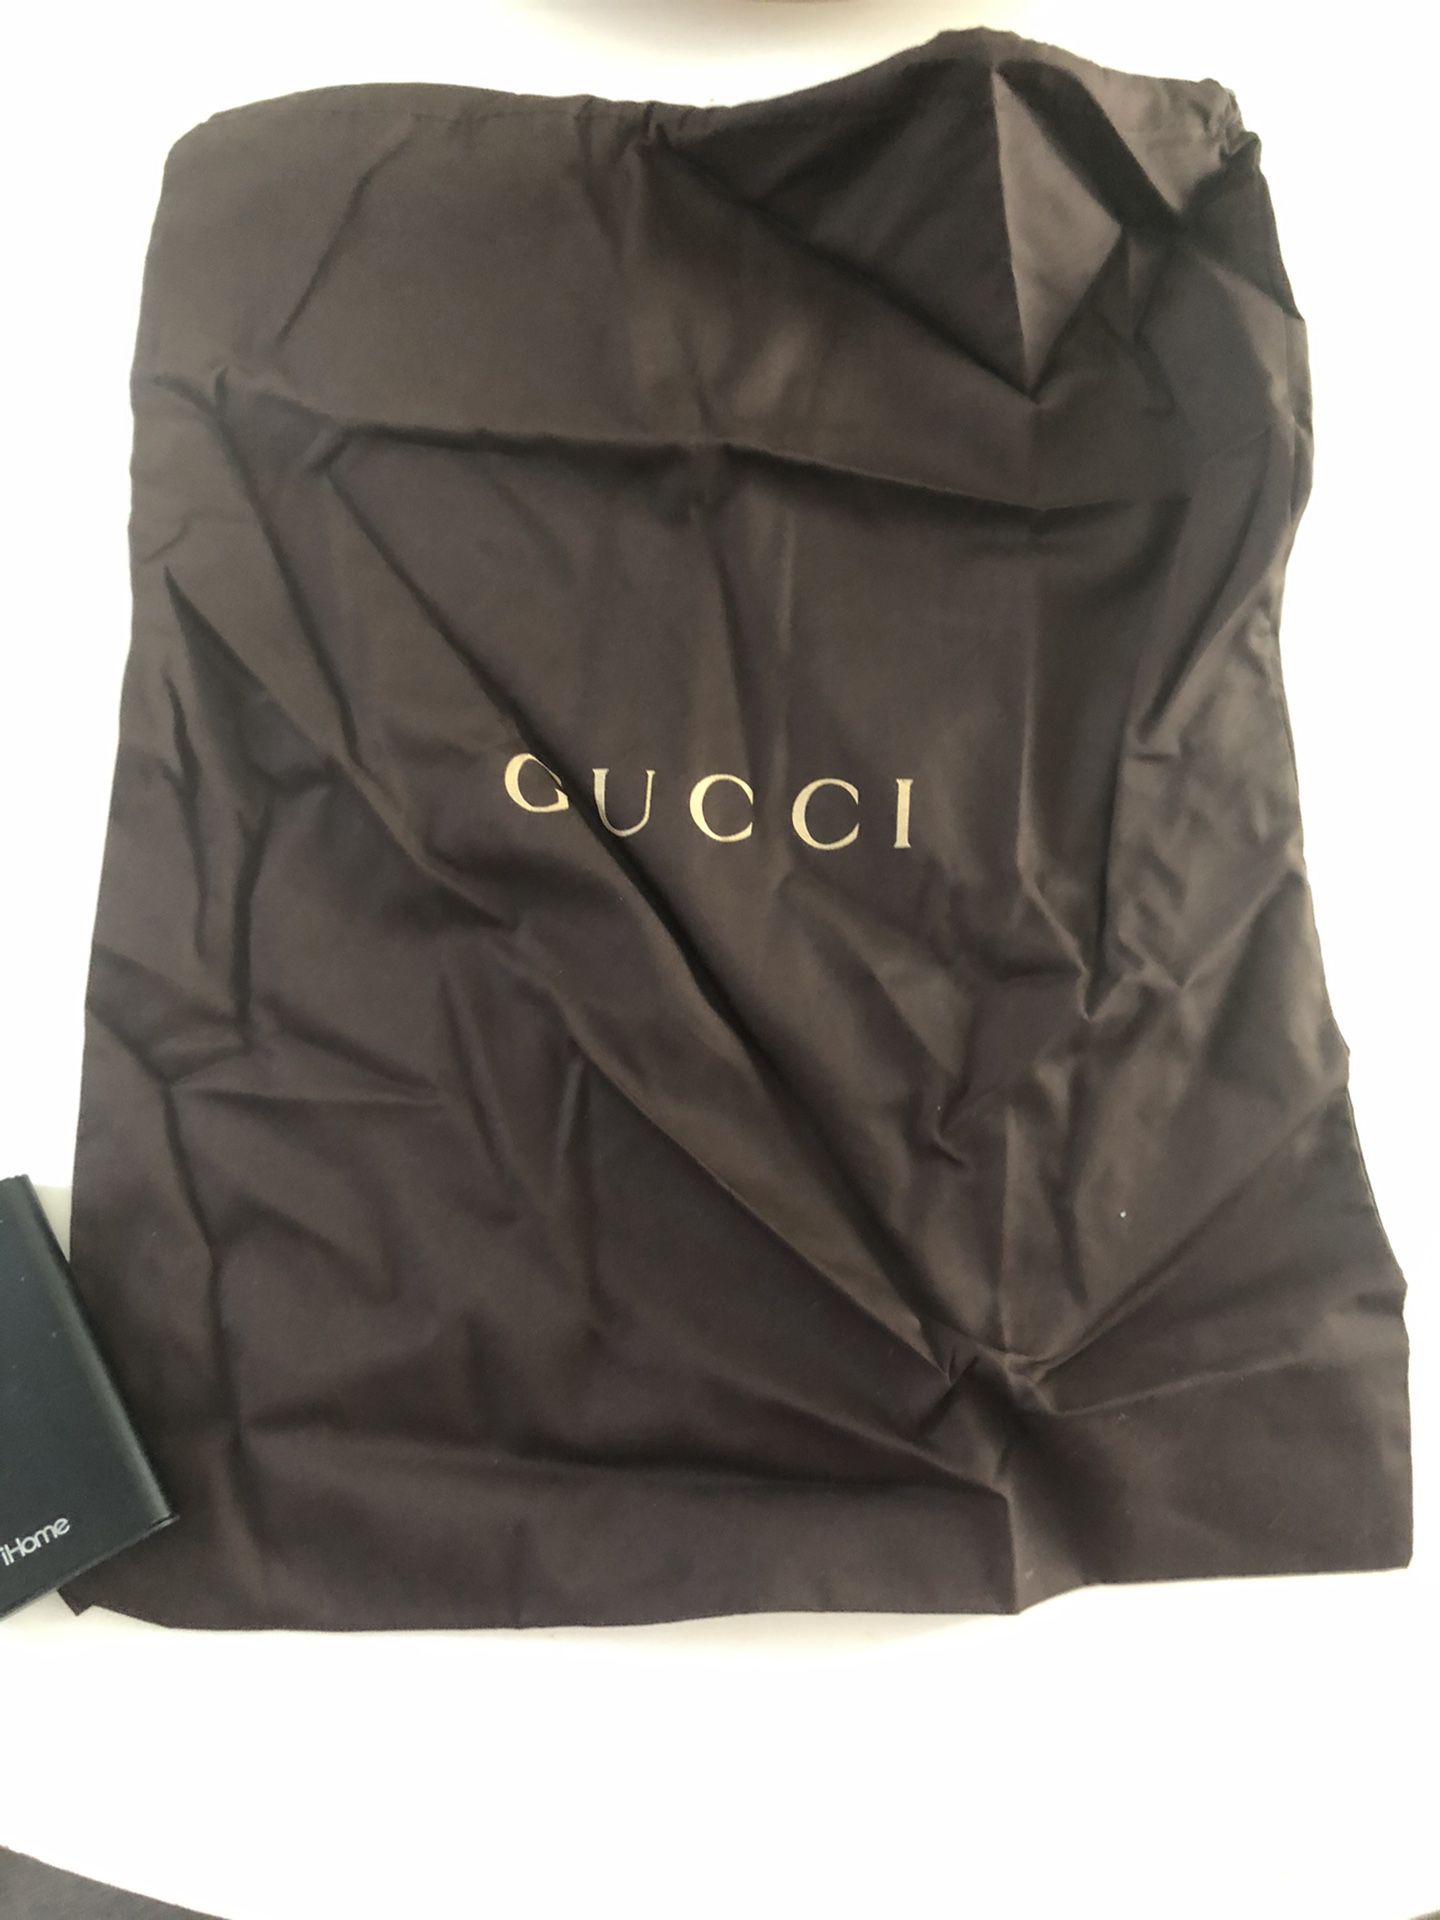 Gucci dust bag